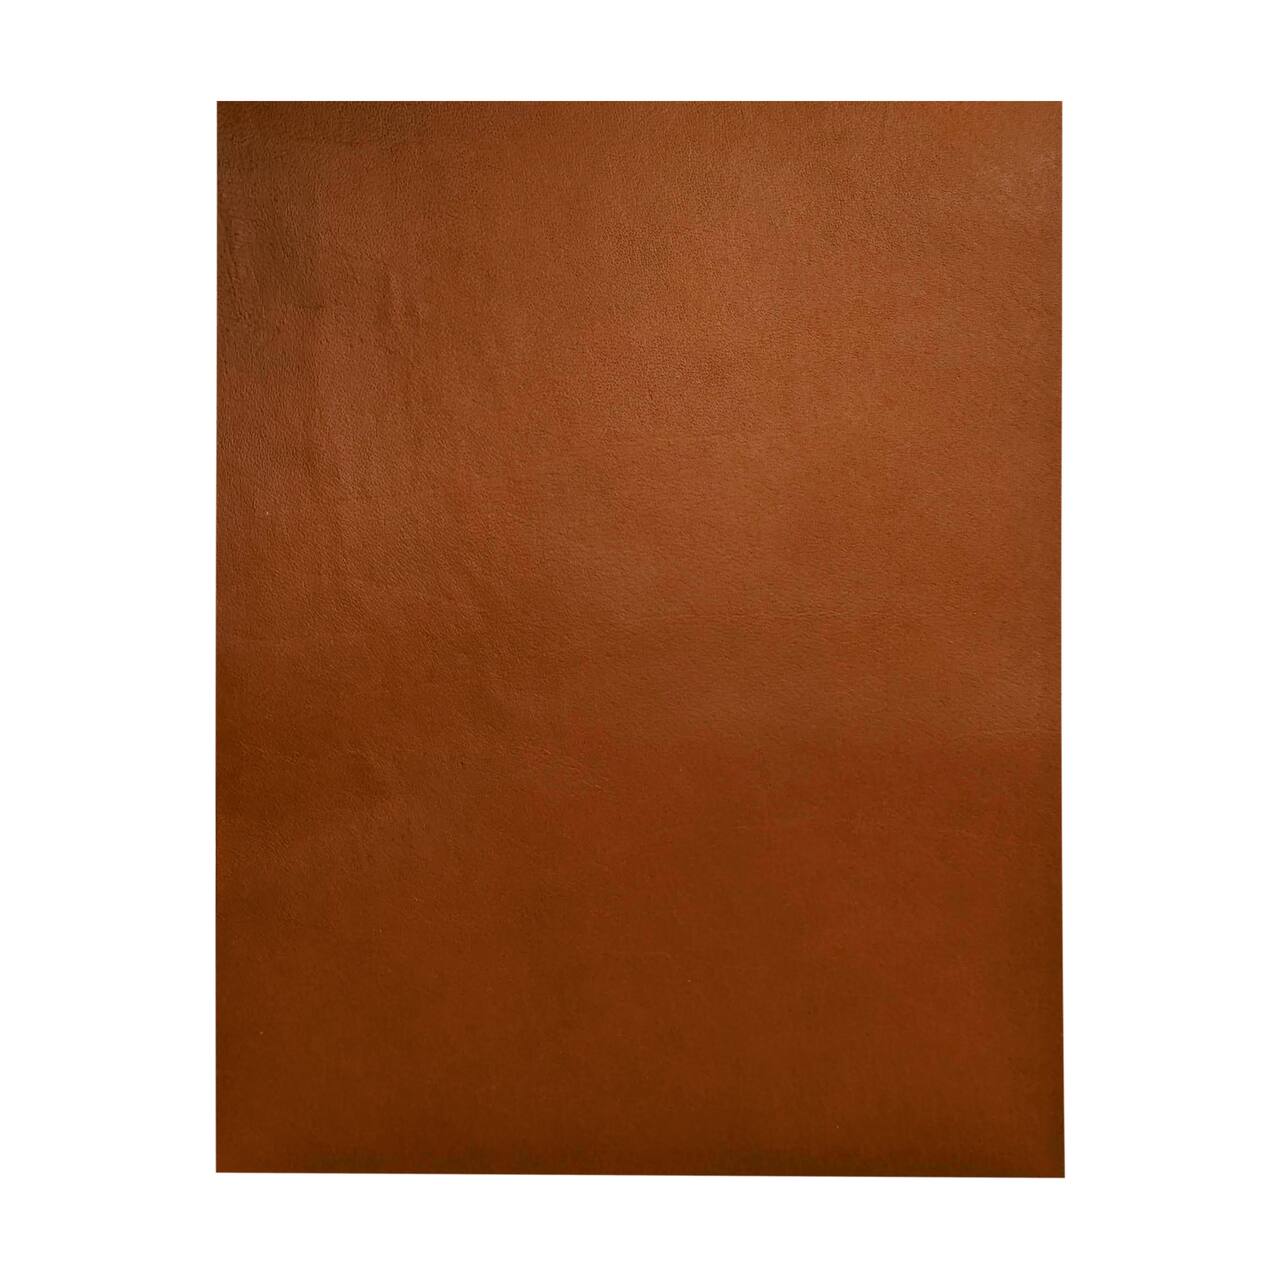 Terracotta Leather Sheet by Make Market®